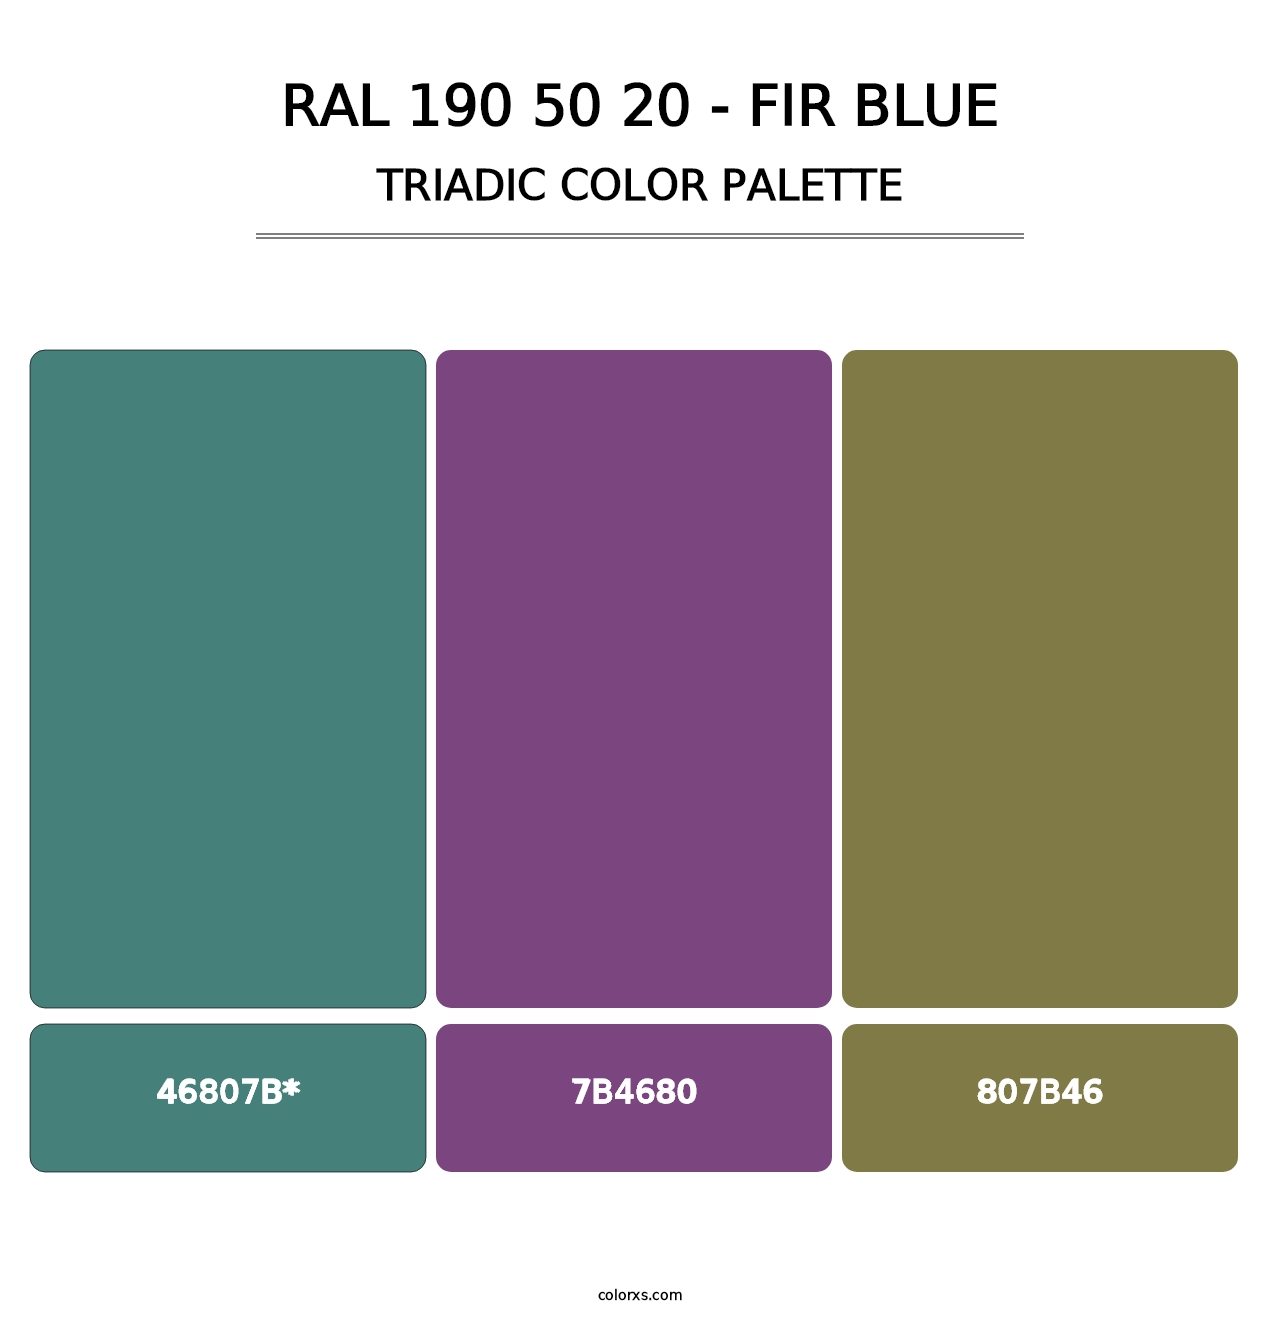 RAL 190 50 20 - Fir Blue - Triadic Color Palette